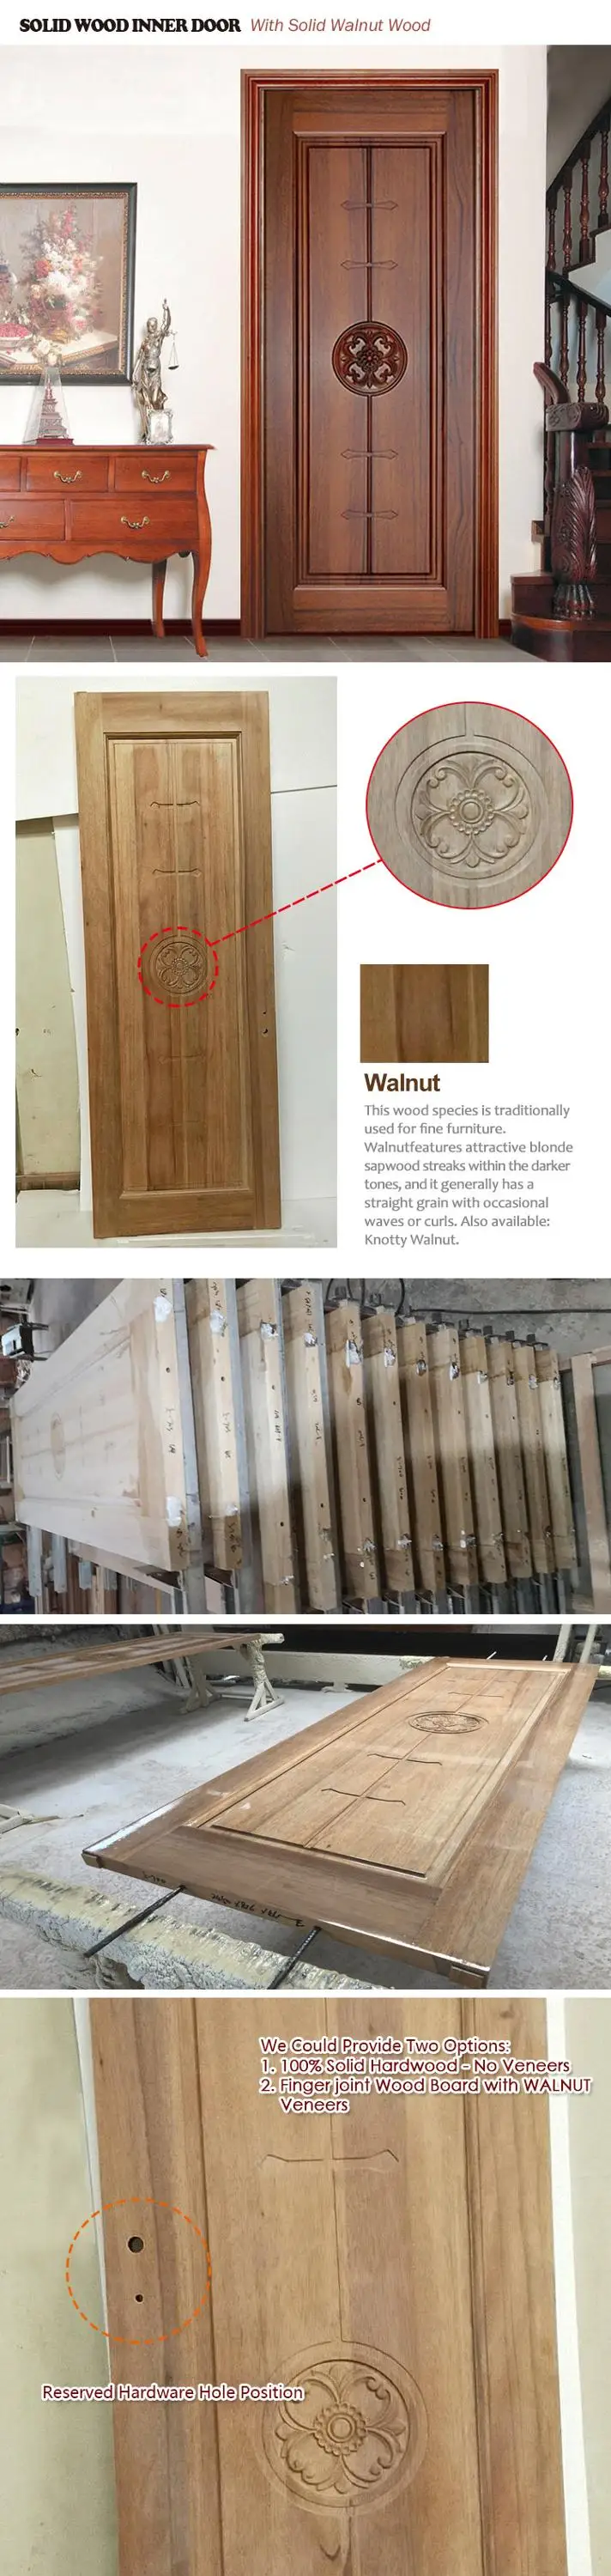 Professional factory inner door designs house wood models